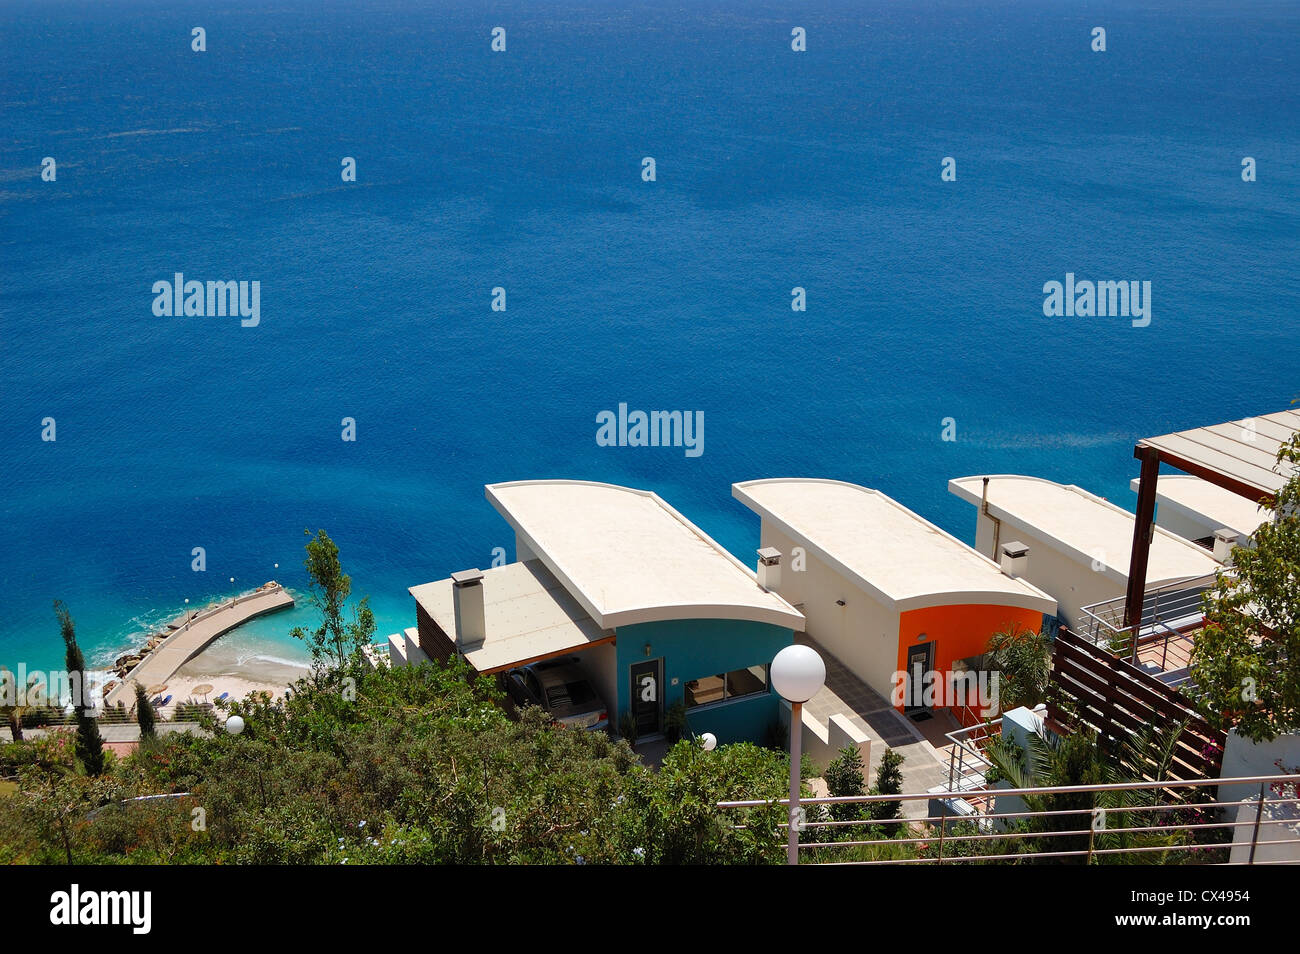 Holiday villas at resort, Crete, Greece Stock Photo